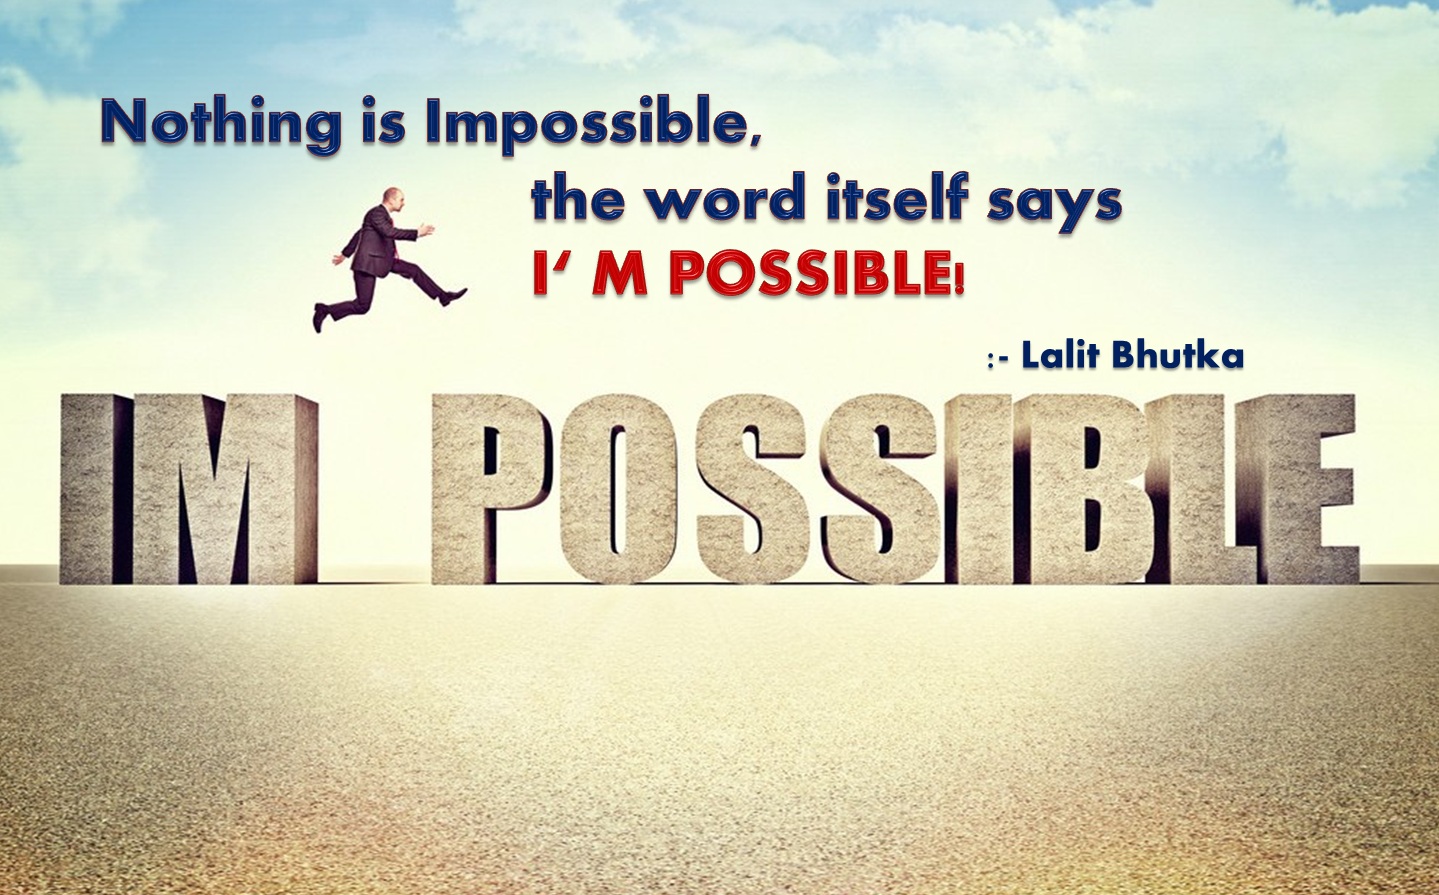 Possible com. Импосибл. Possible агентство. Impossible надпись. Nothing is Impossible. The World itself says Impossible.